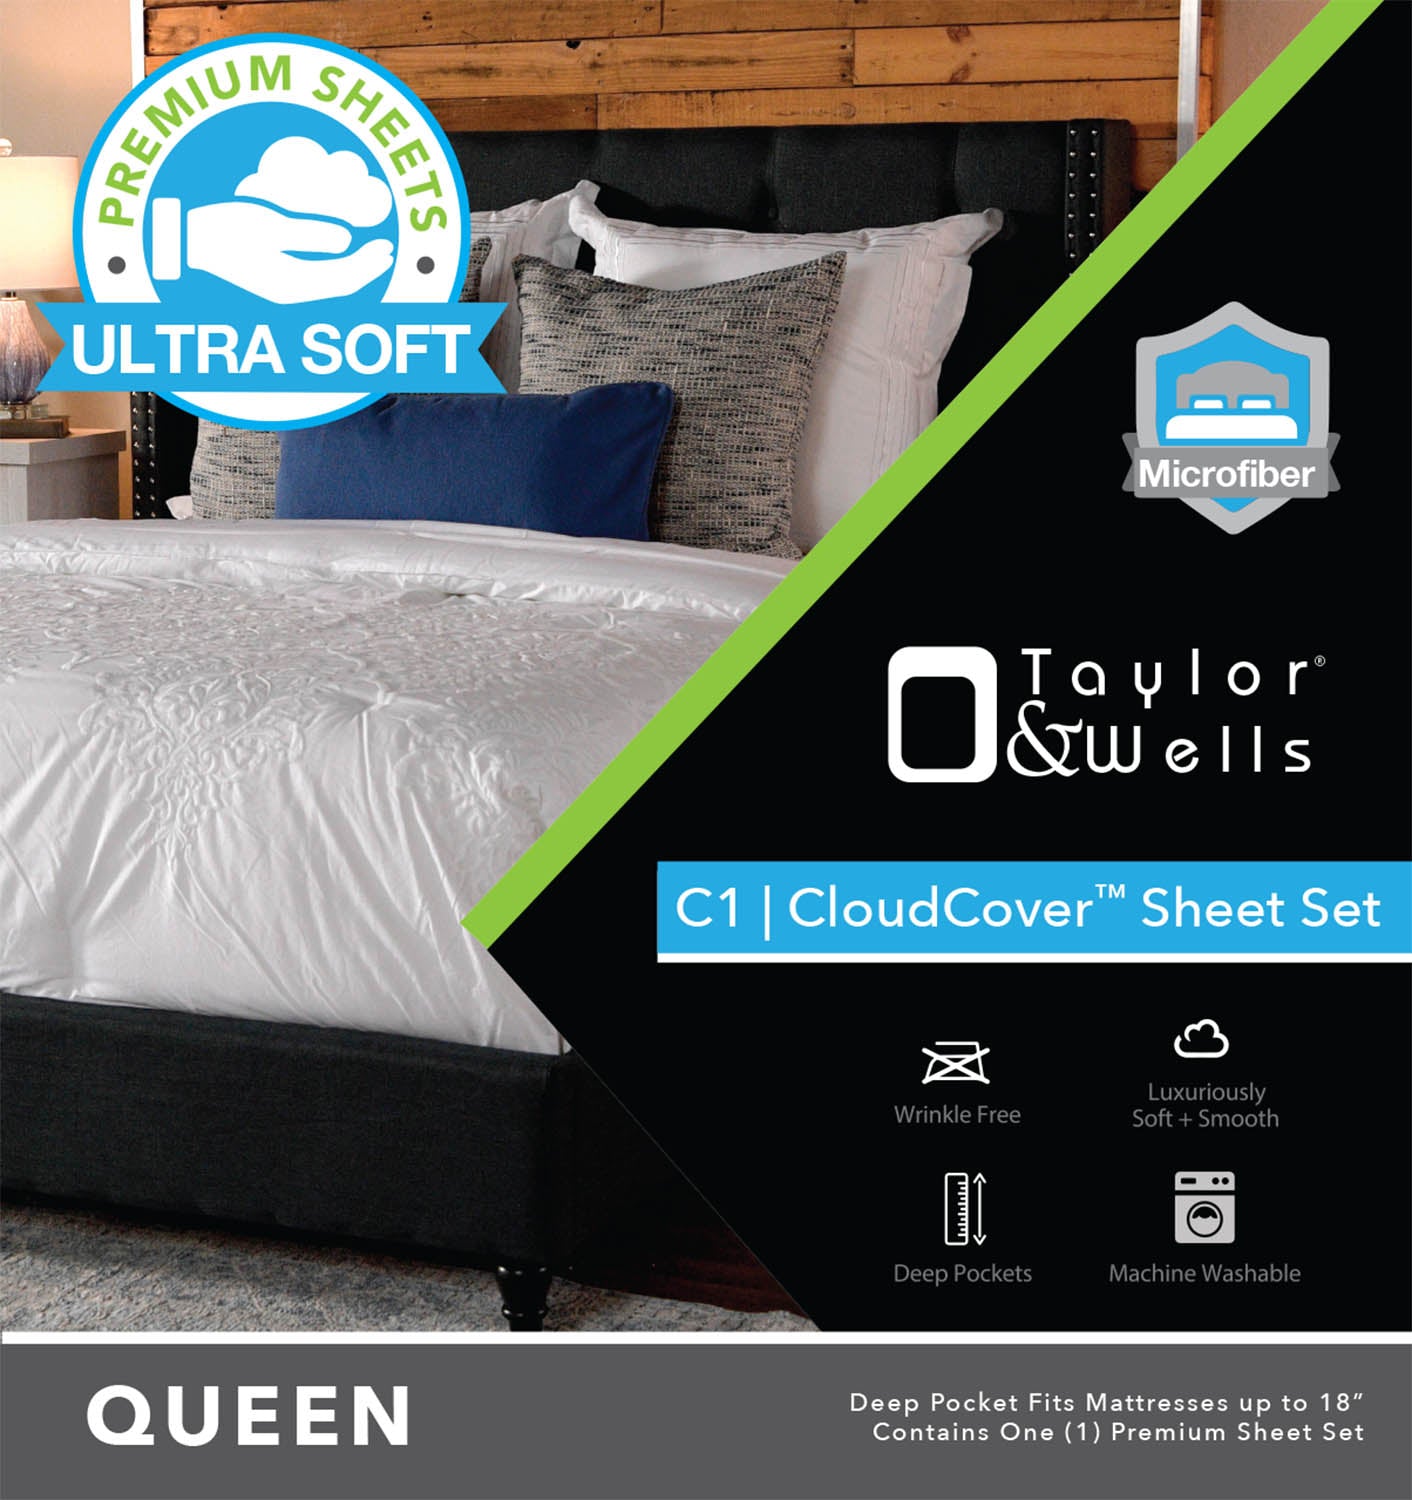 C1 | CloudCover™ Sheet Set